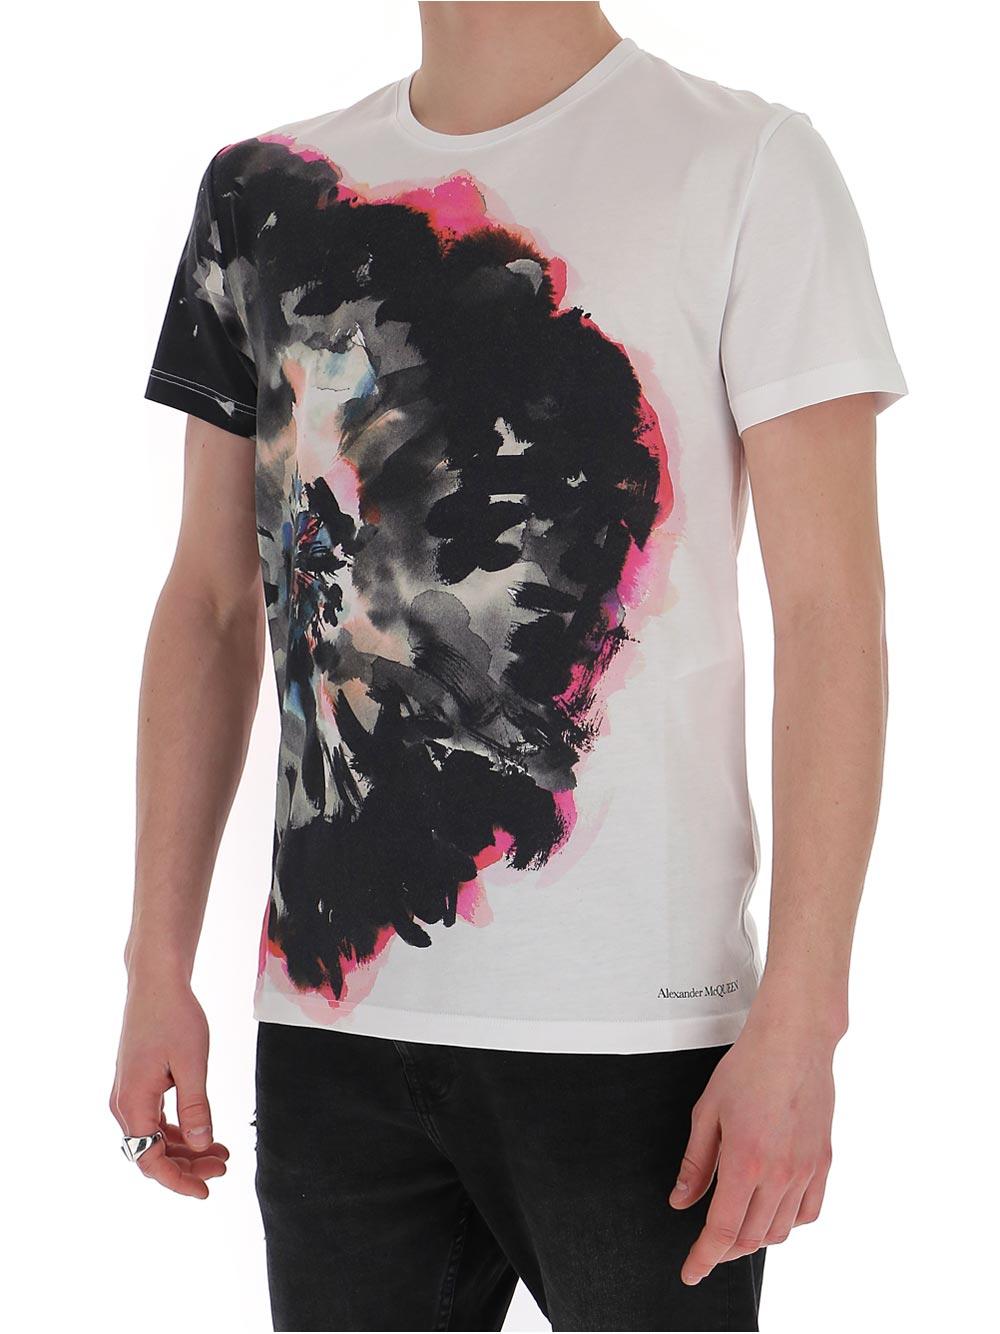 Alexander McQueen Cotton Ink Flower Print T-shirt in White for Men - Lyst